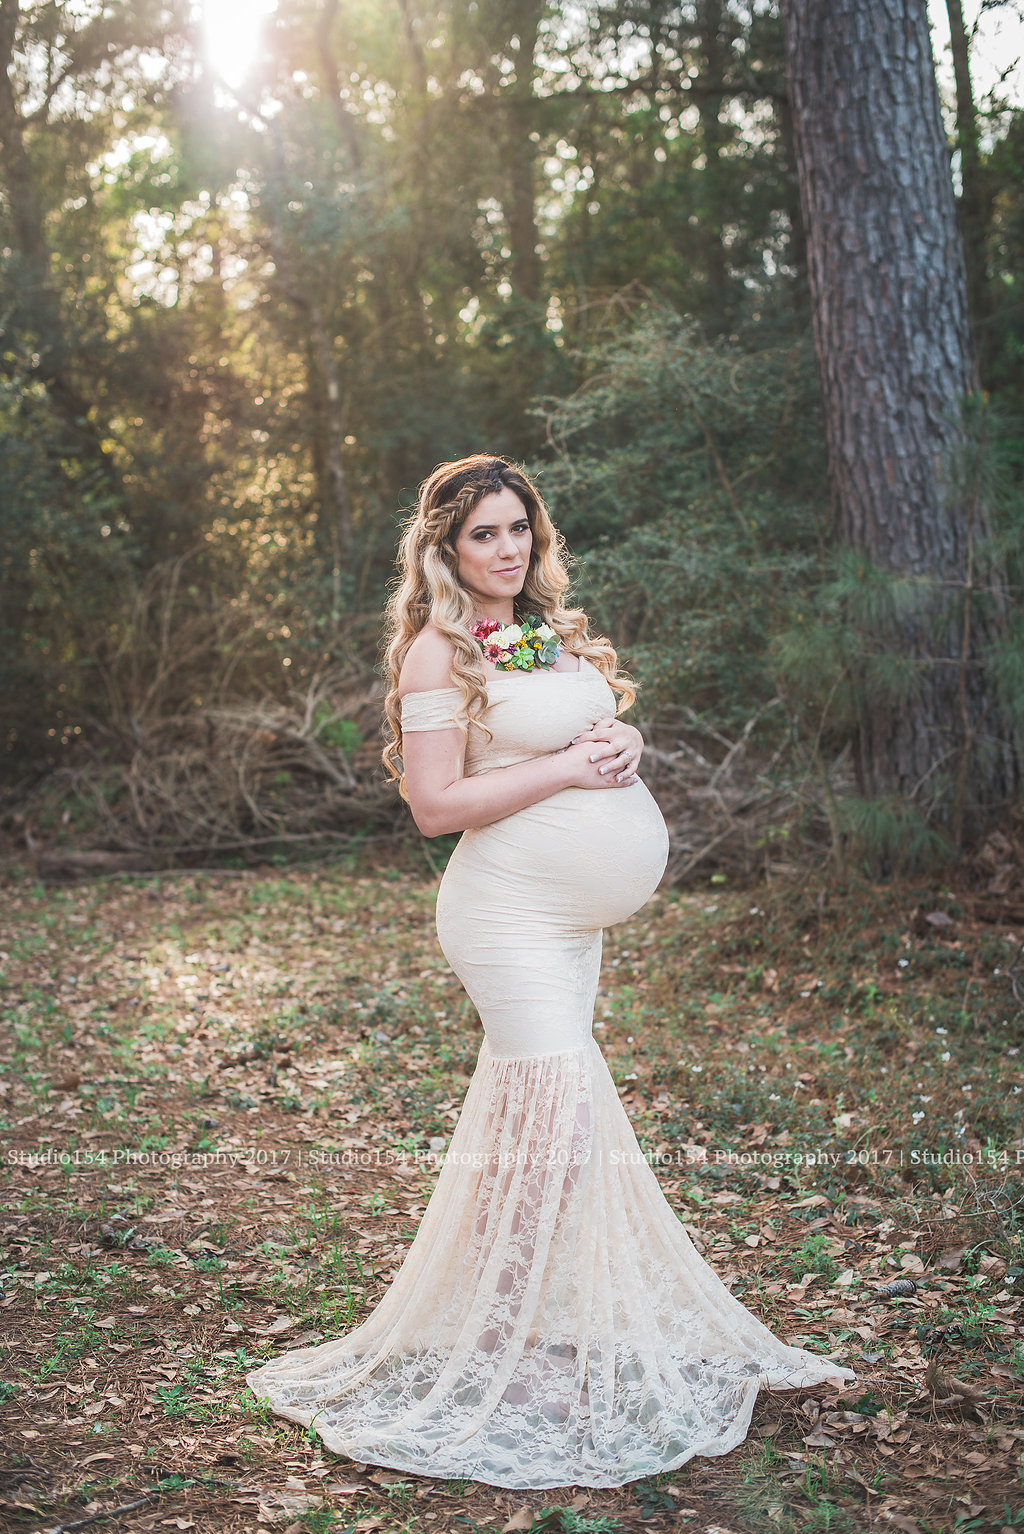 My Rainbow baby Maternity shoot. - The Ashmores Blog